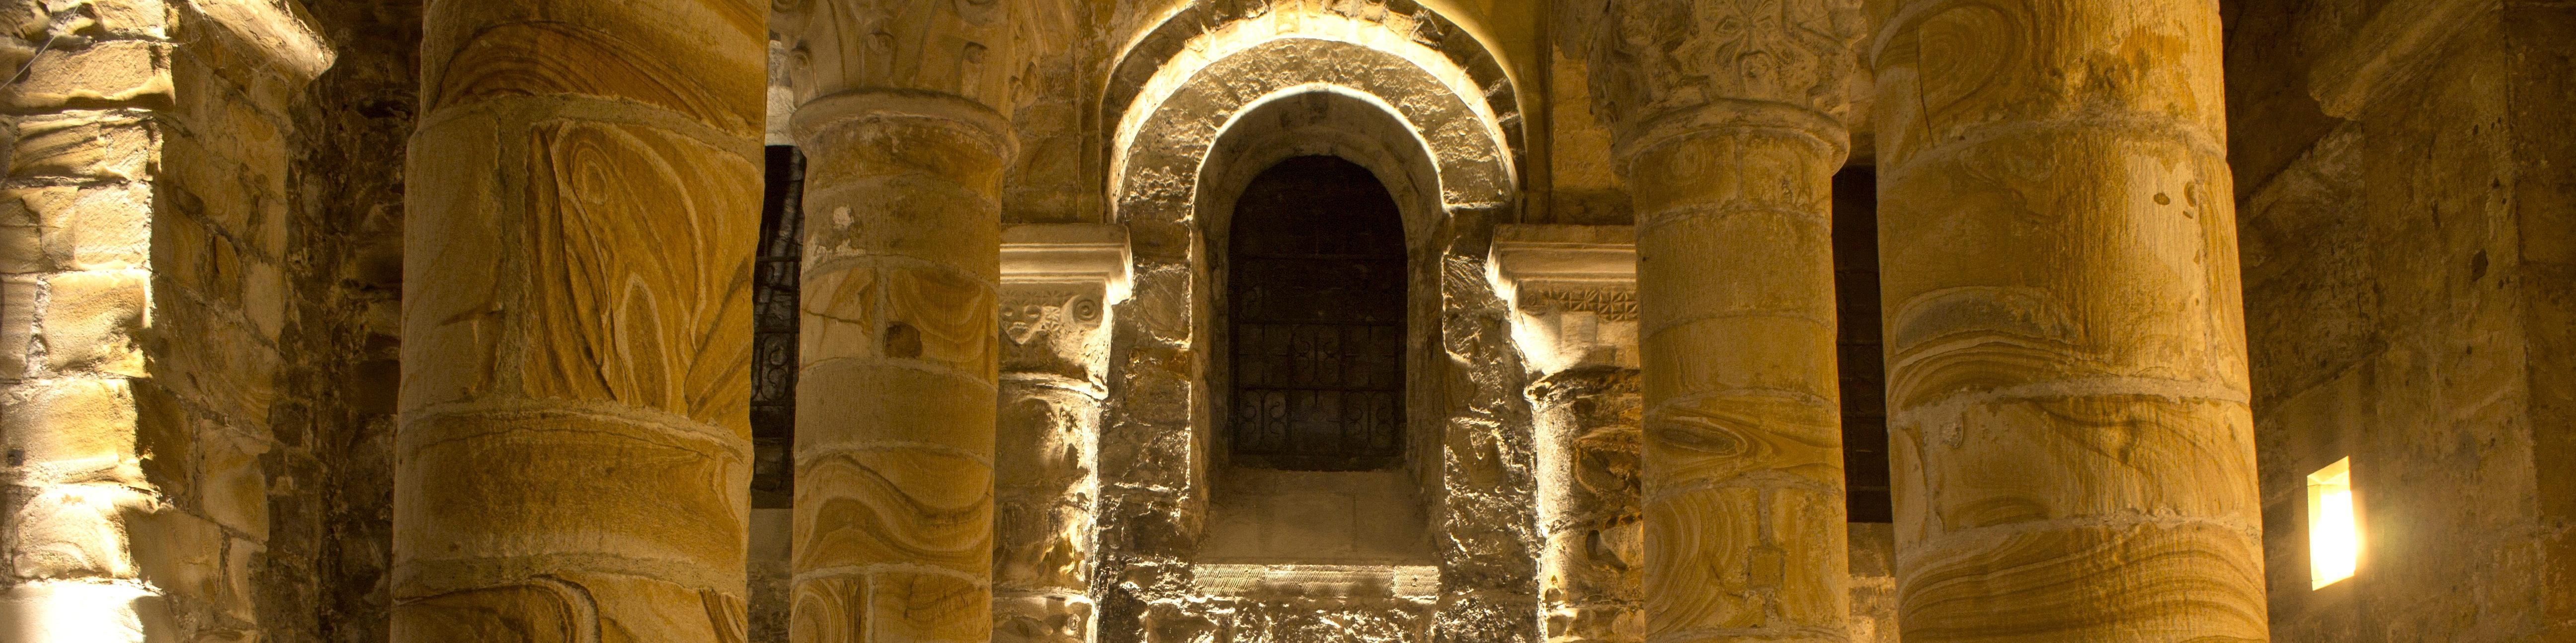 The Norman Chapel window